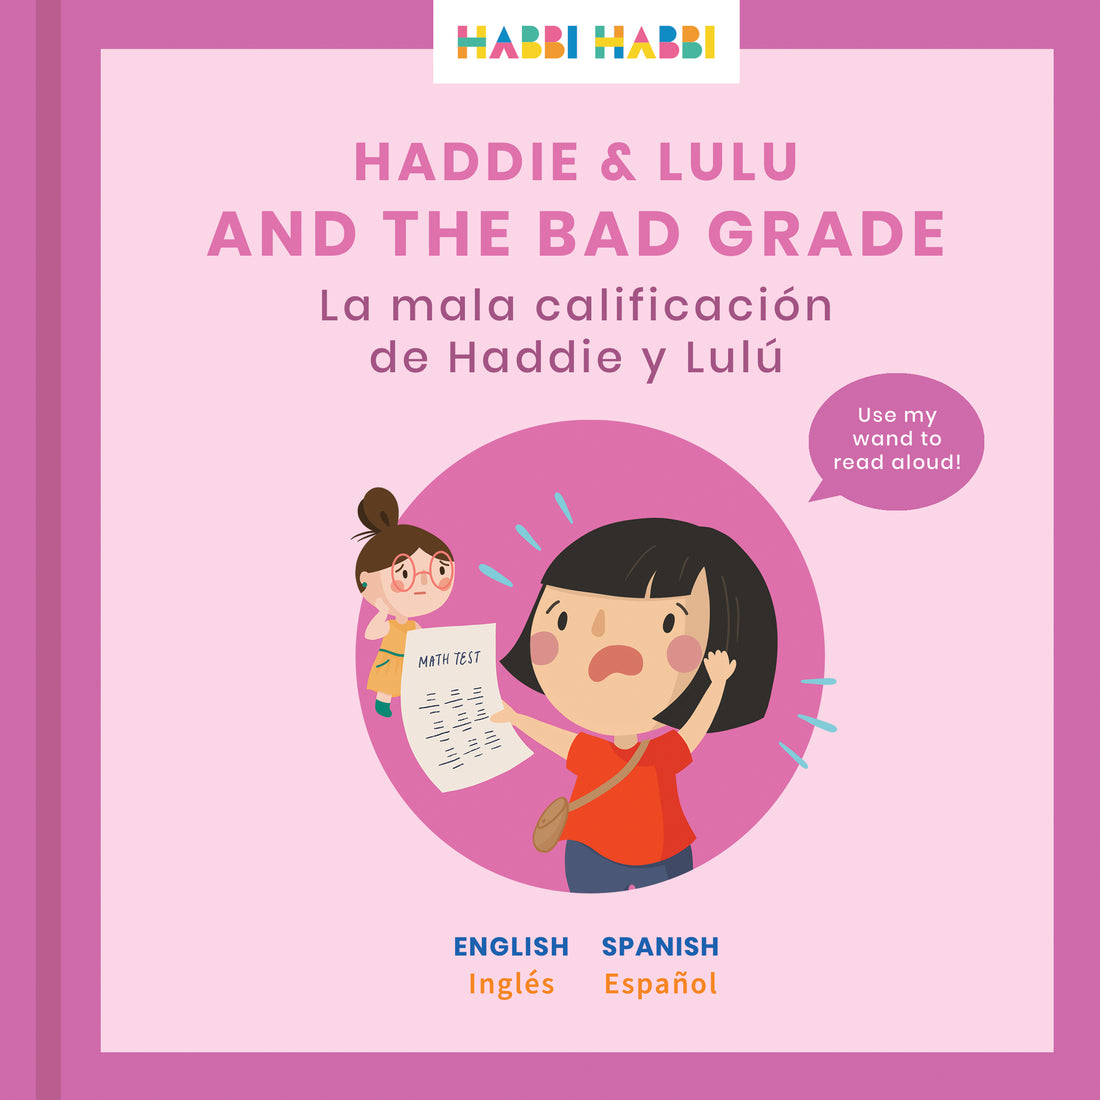 Haddie & Lulu and the Bad Grade